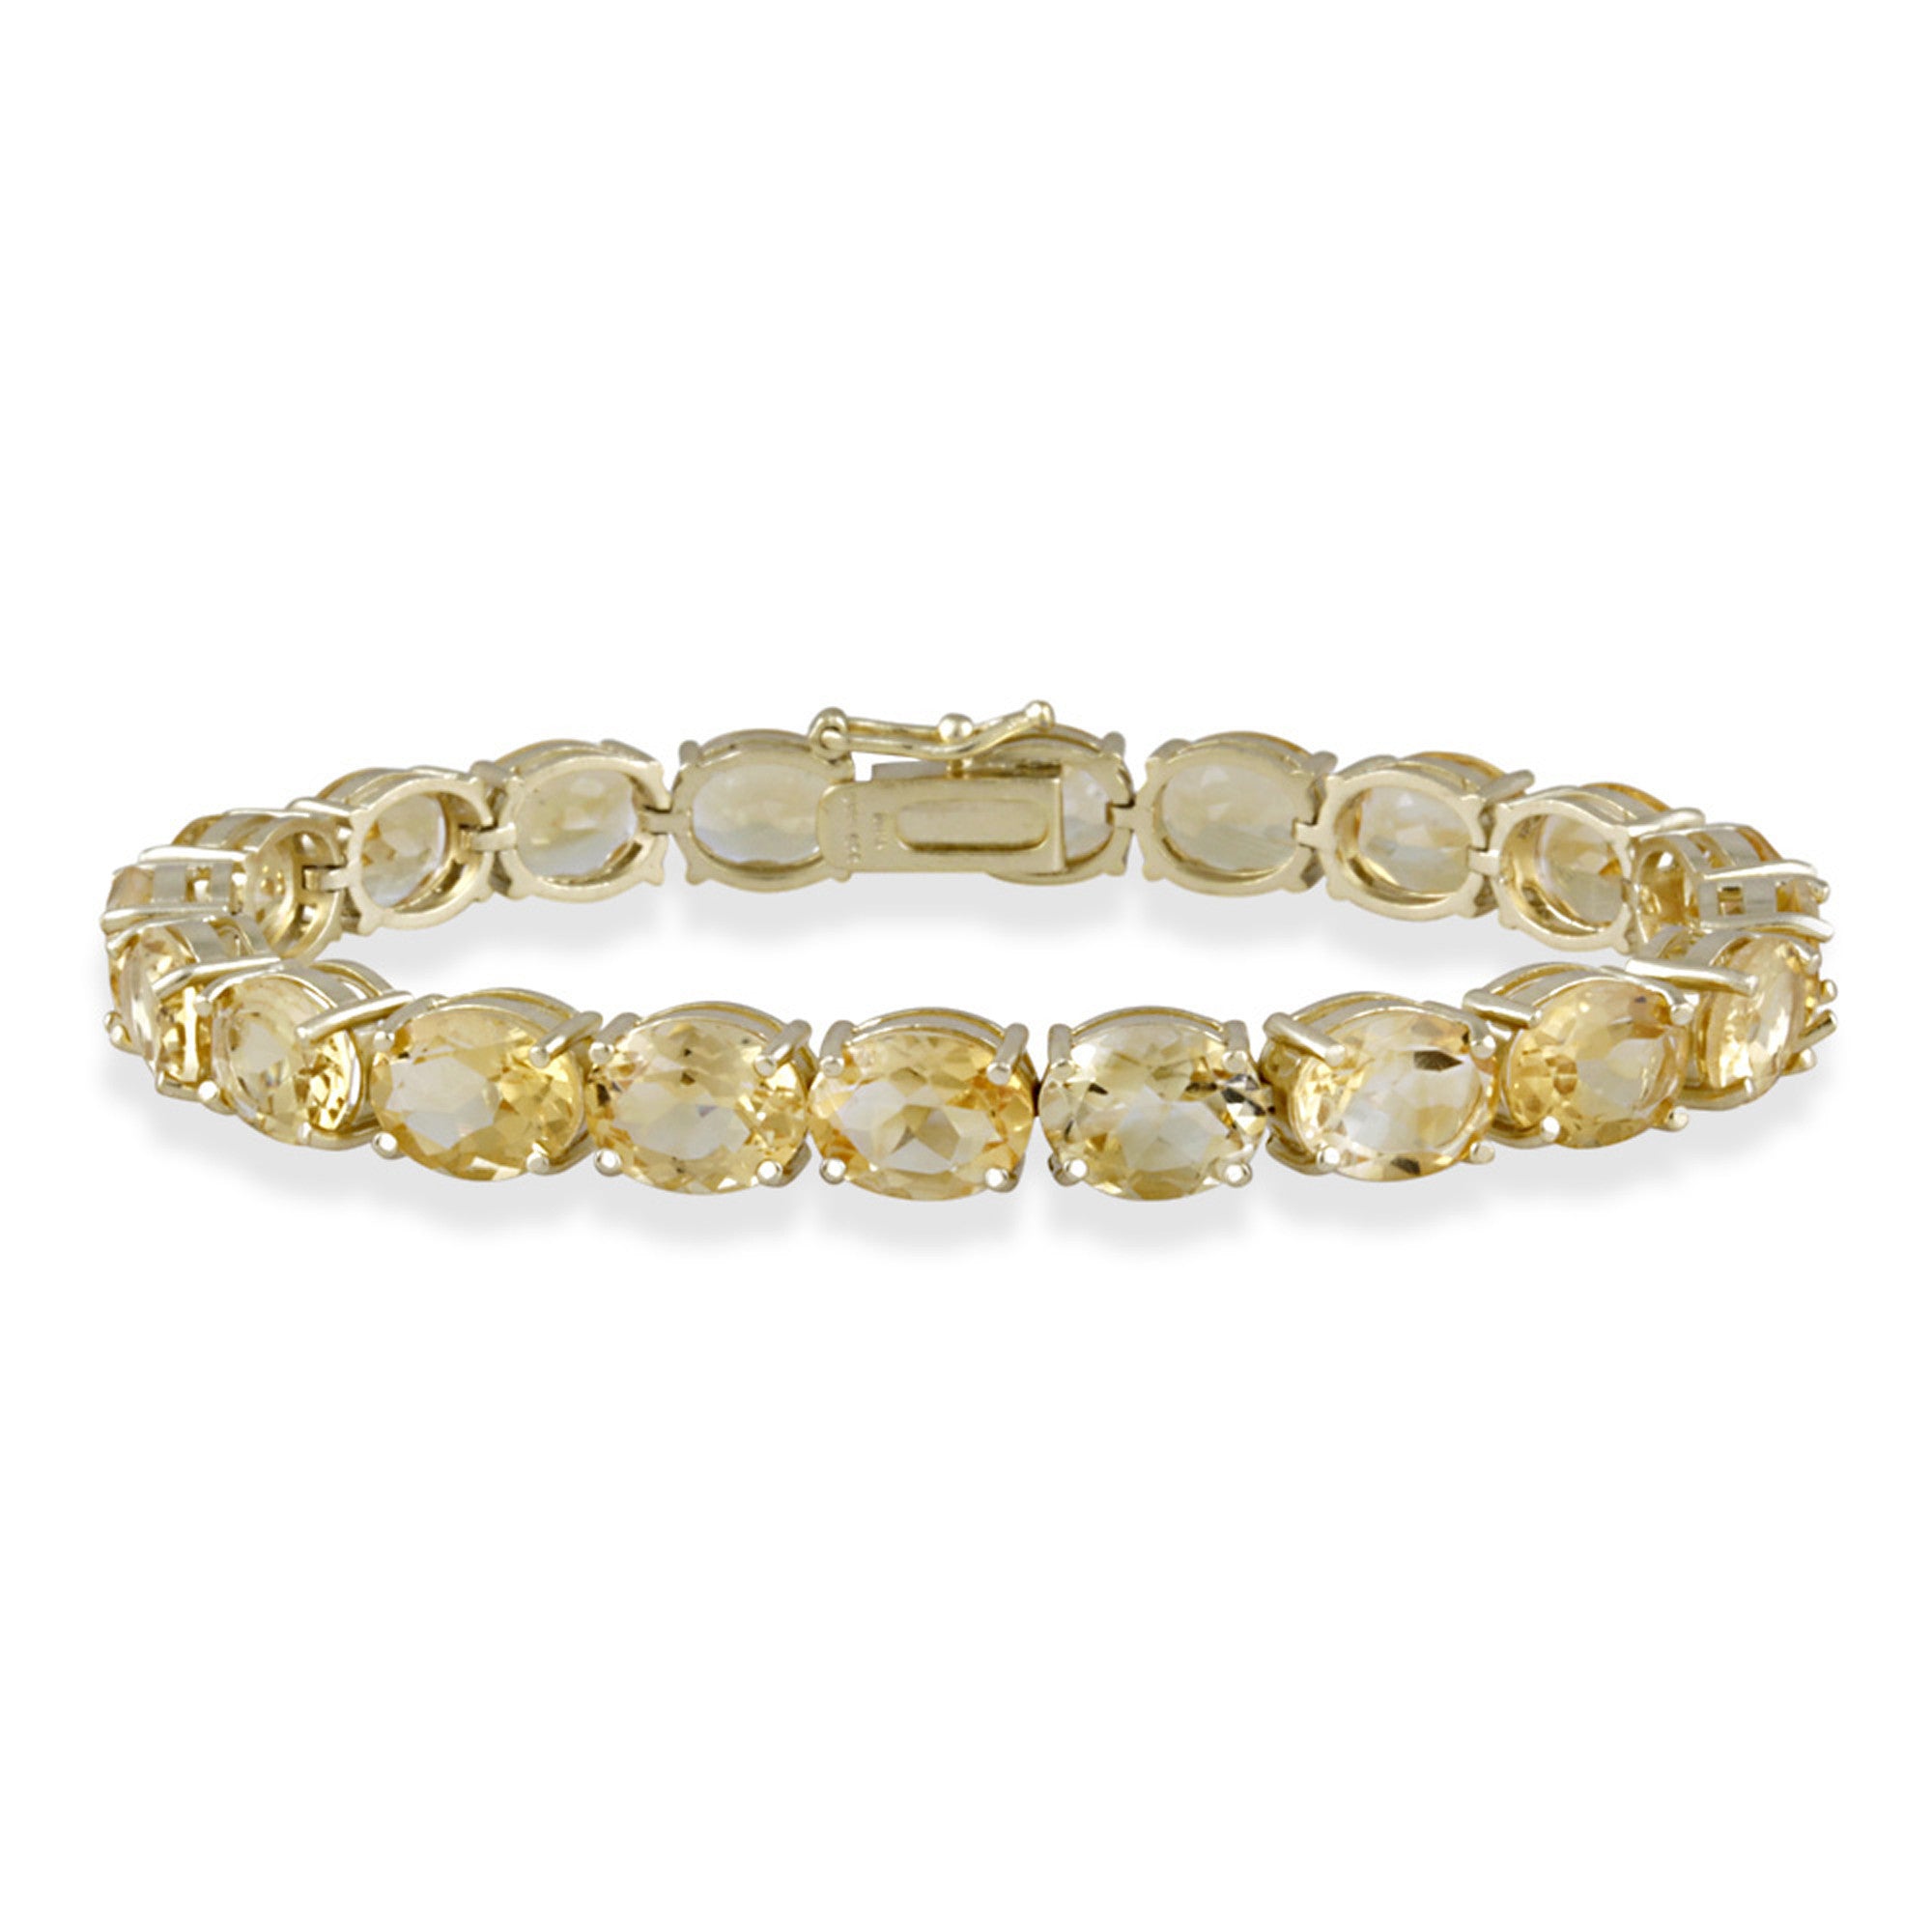 Gemstone Charm Bracelet With Clasp Fastening - 18k Gold / Citrine